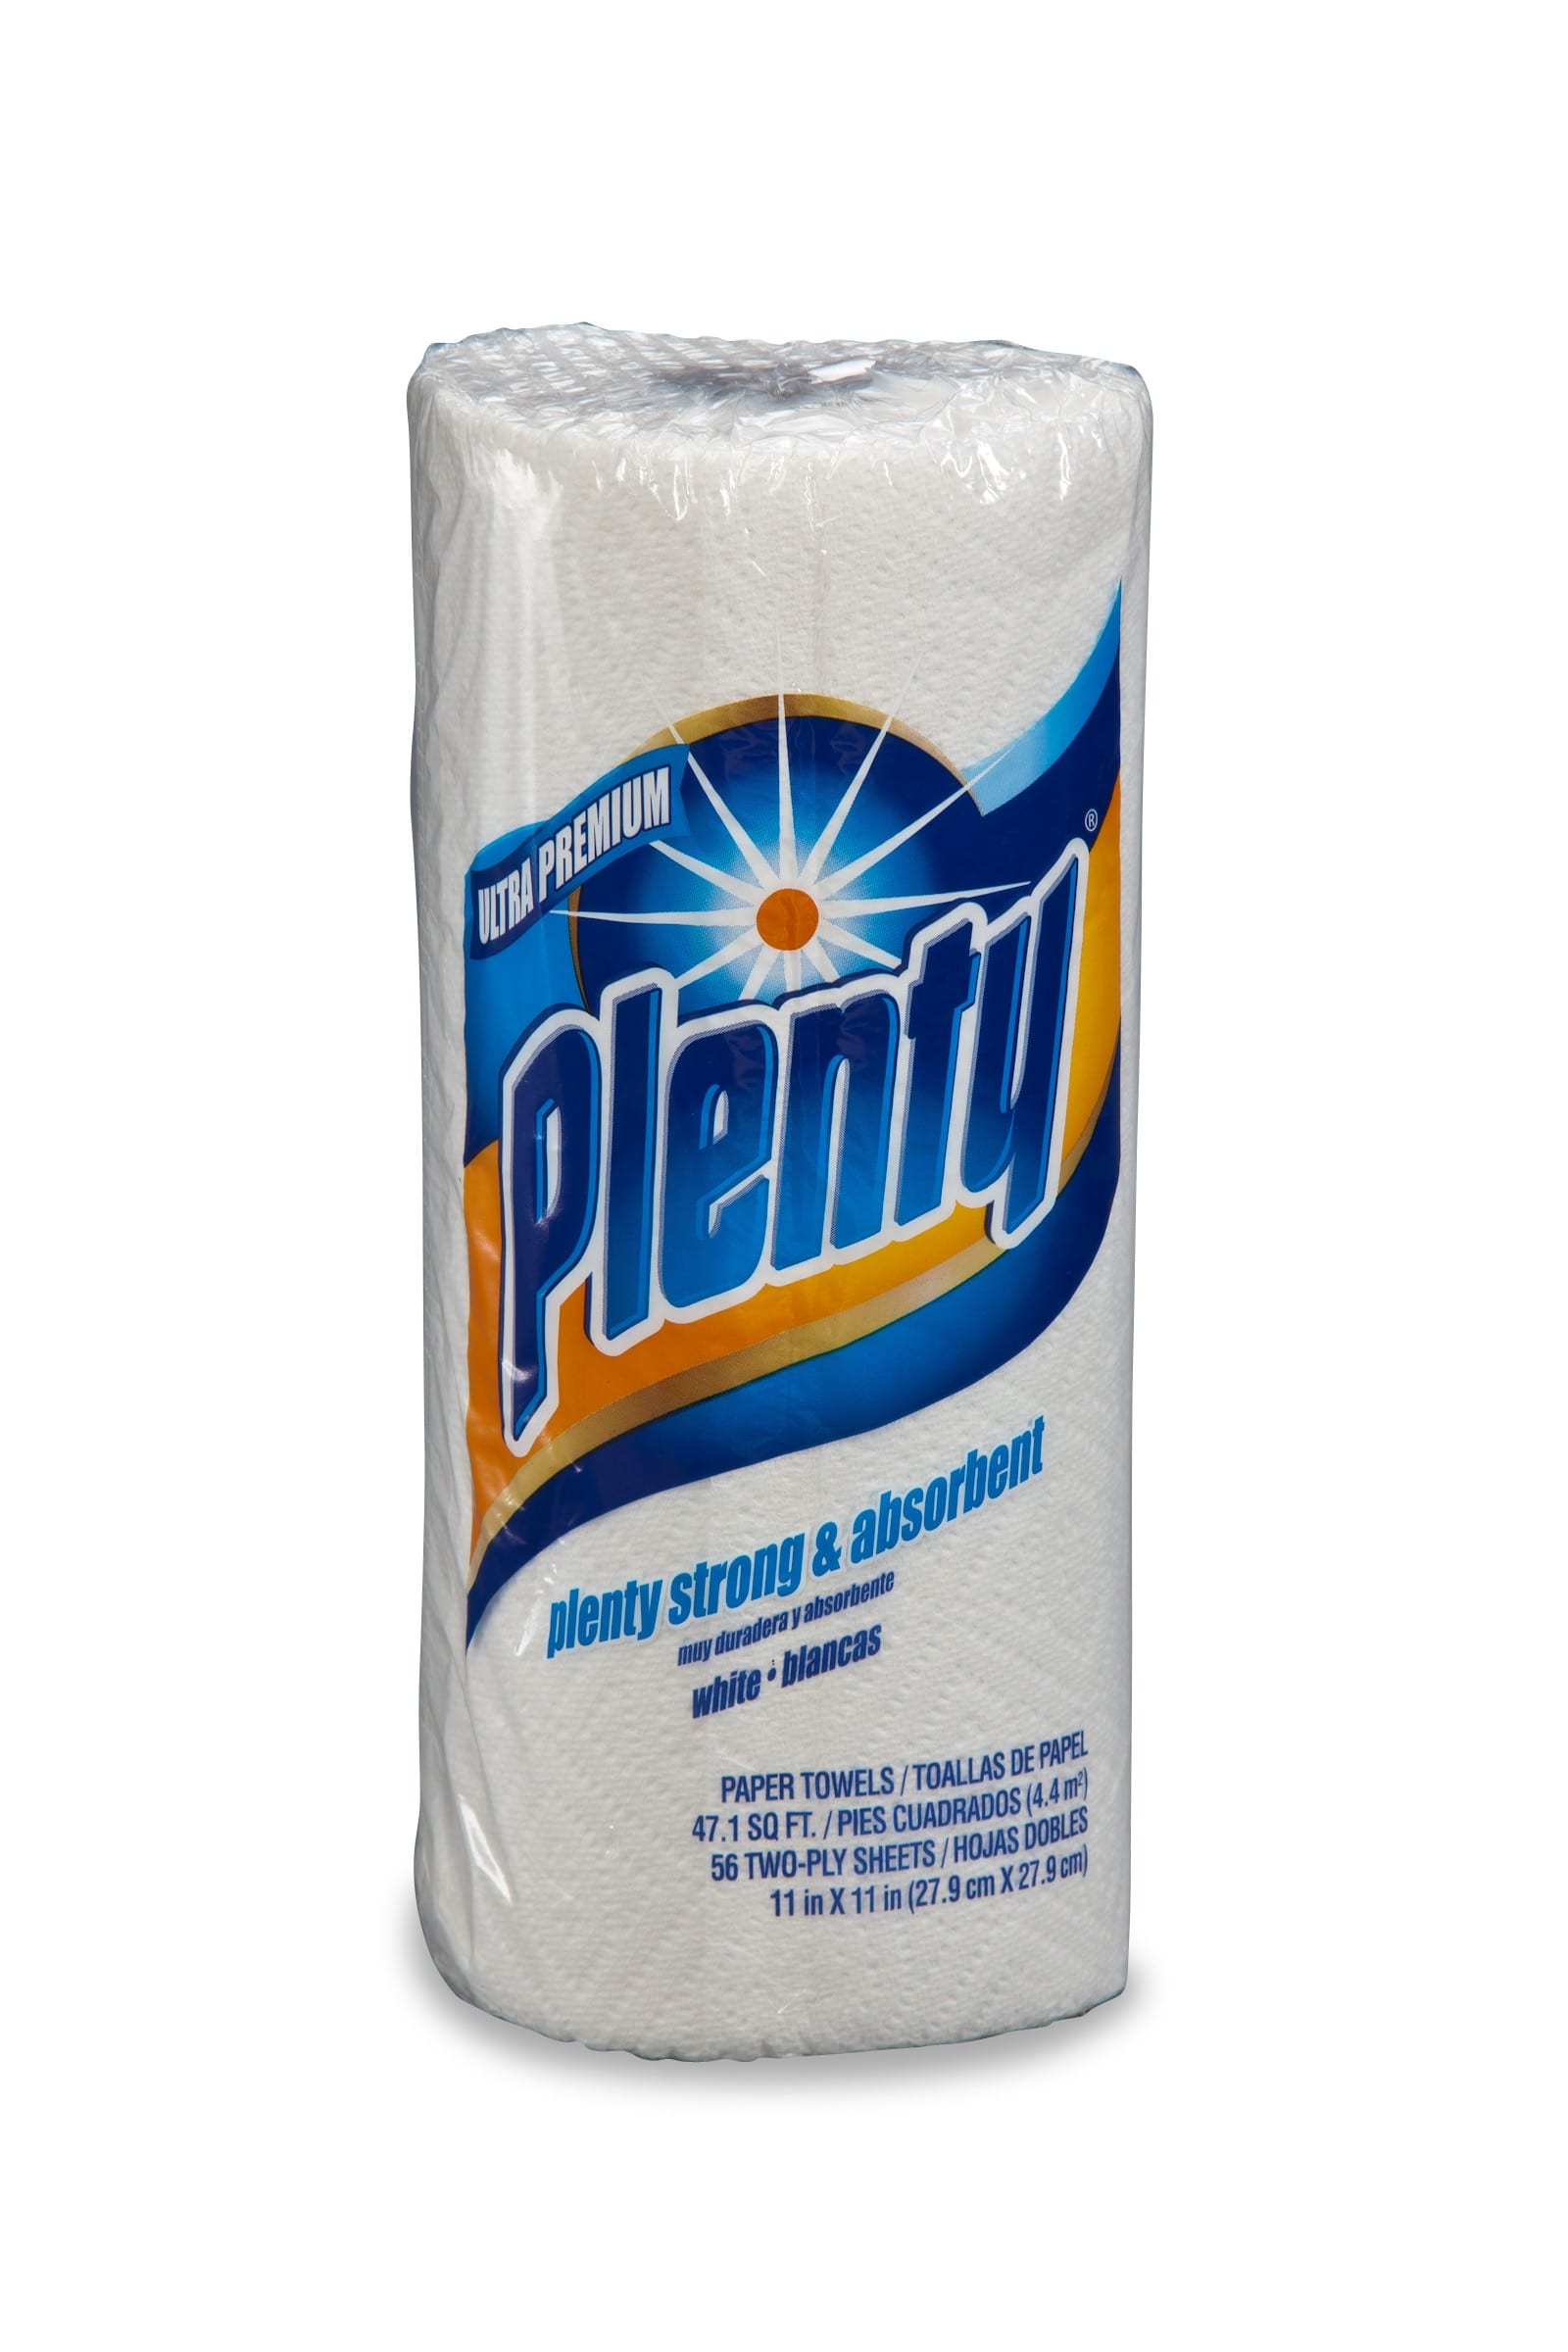 P2620 - Plenty Paper Towel 15/CS - Dependable Plastic